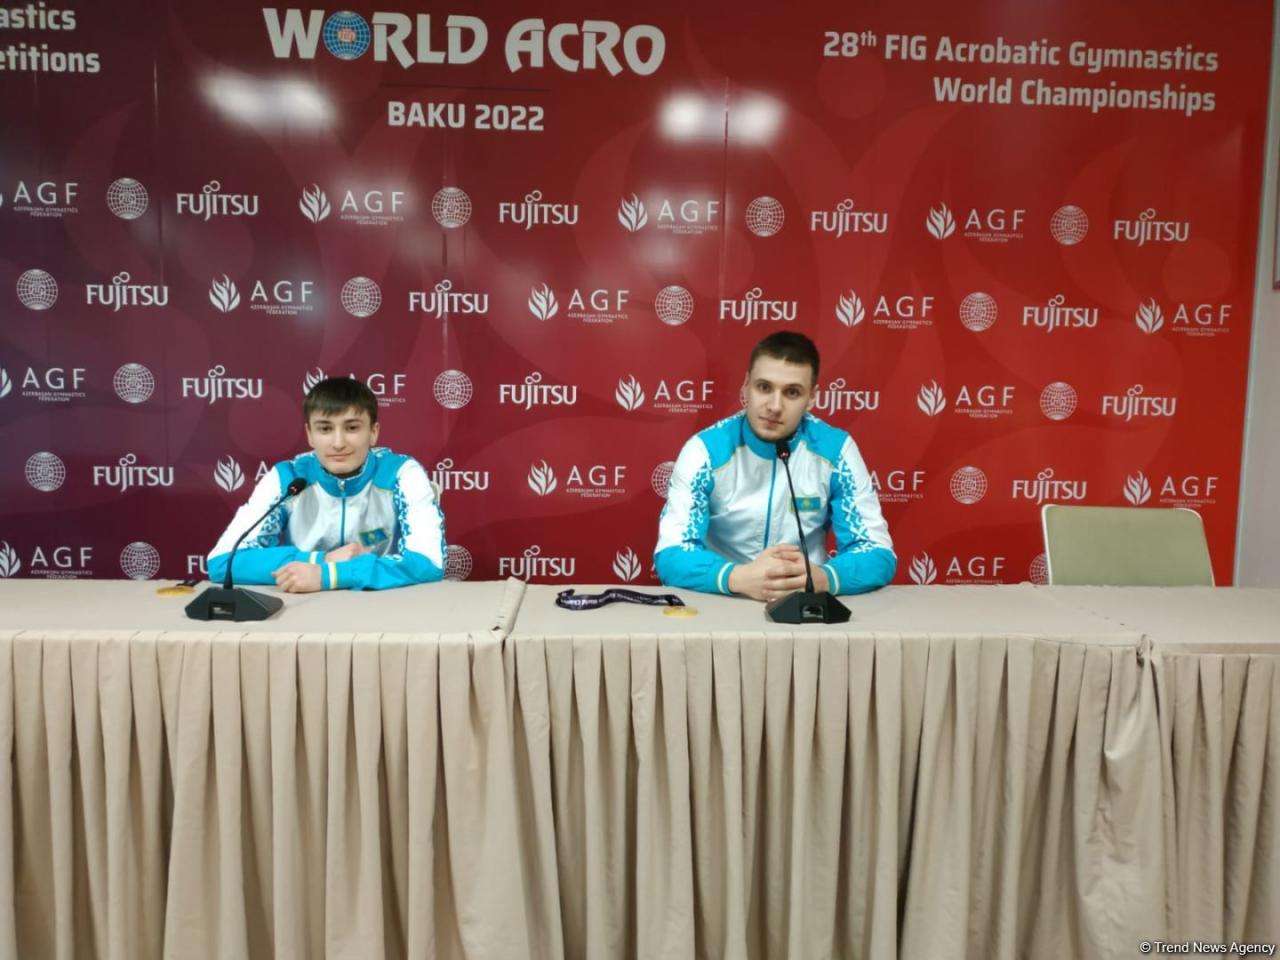 We always feel welcome in Azerbaijan - gold medalists from Kazakhstan